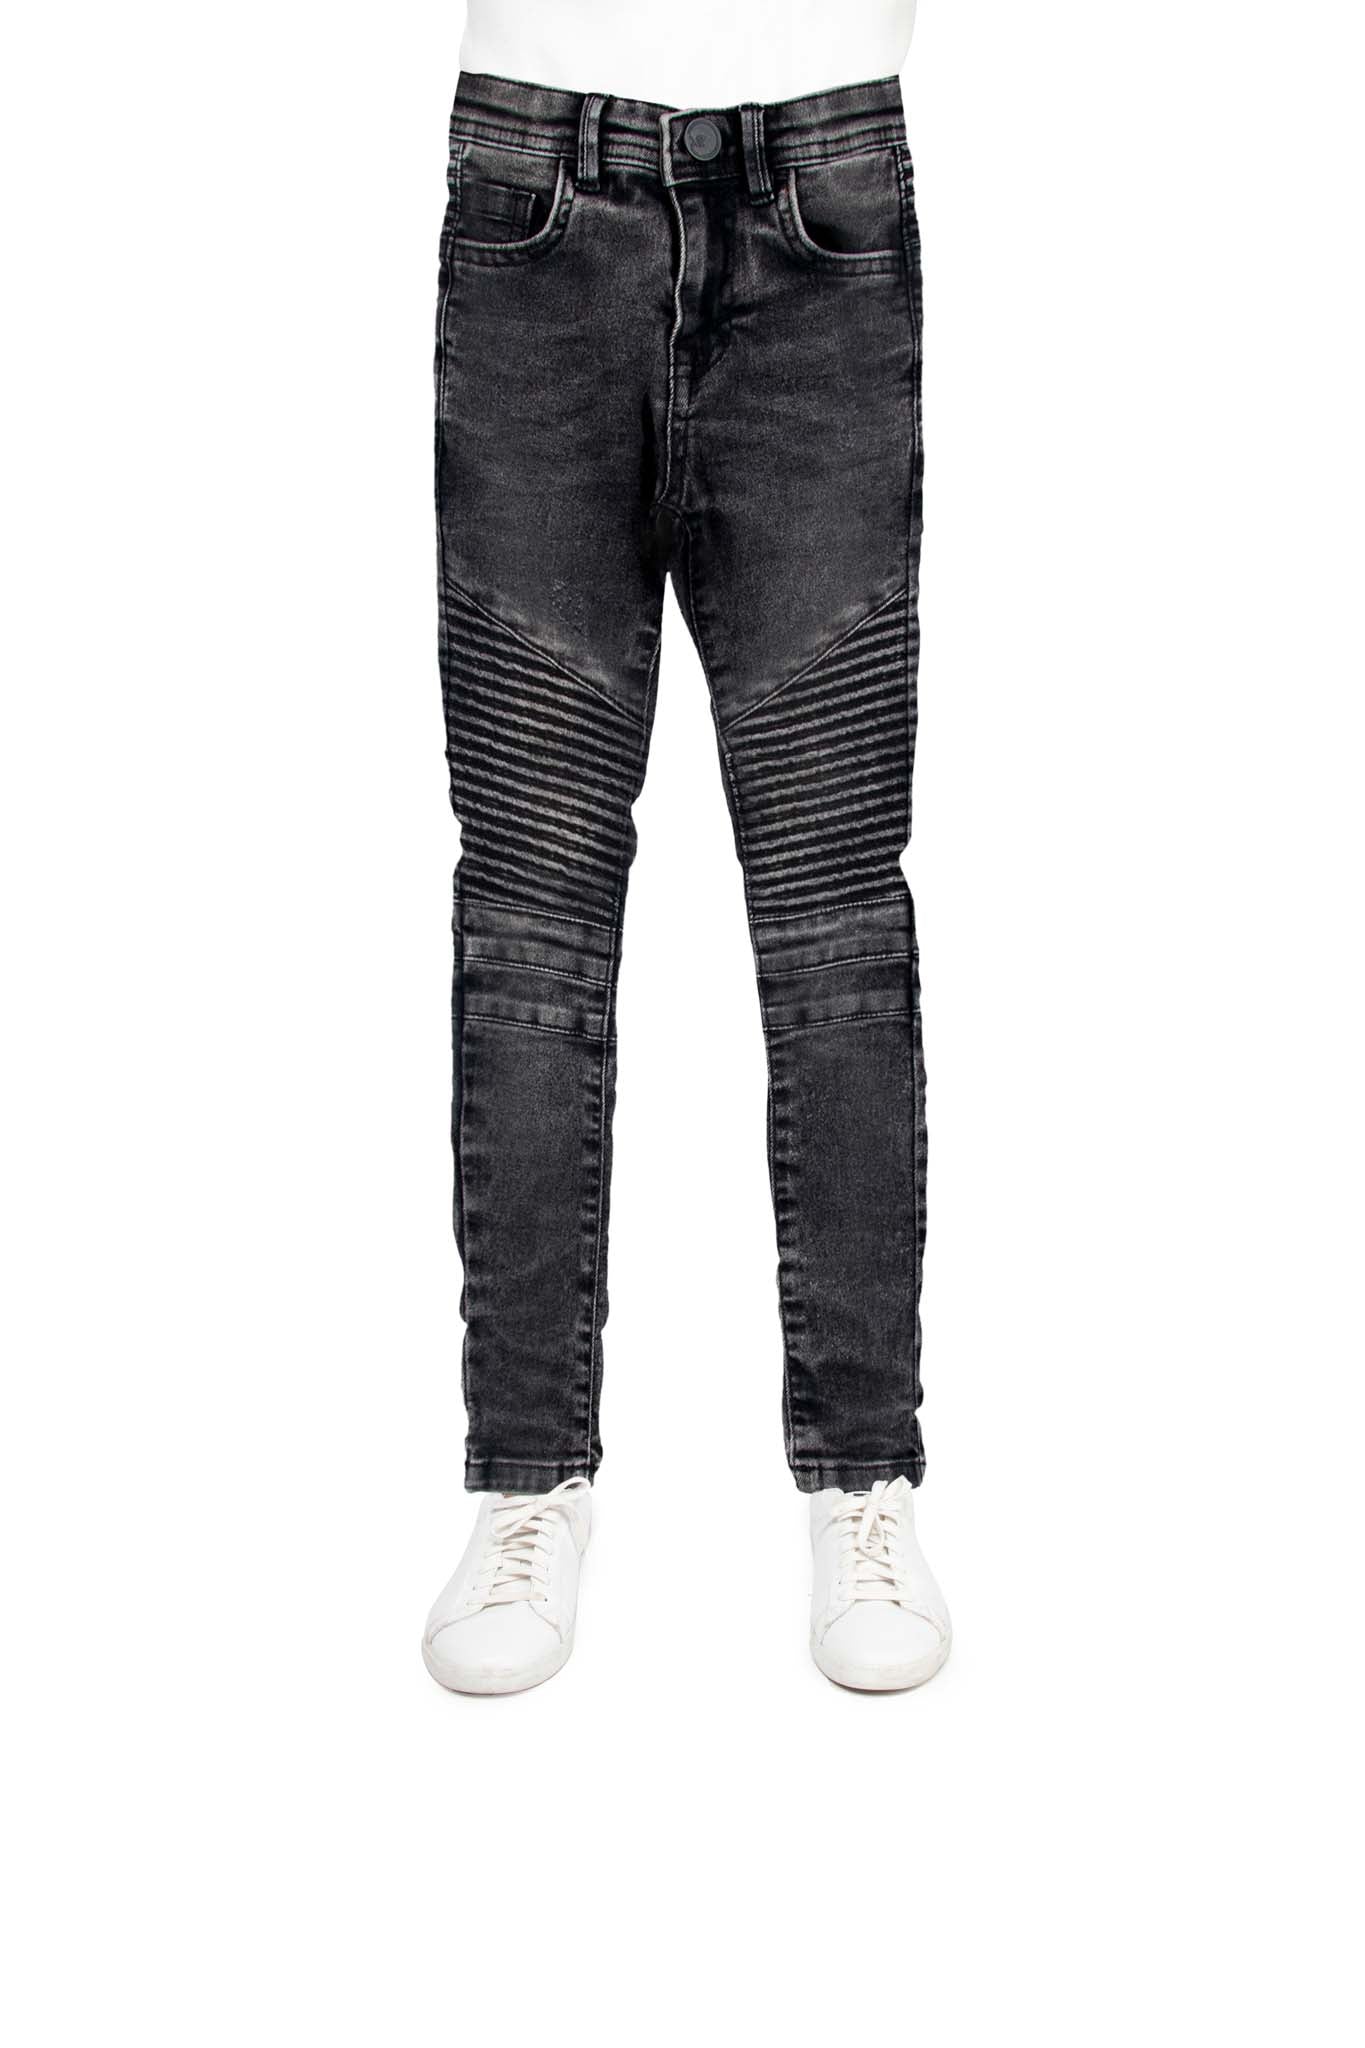 Geavanceerde namens Moet XRay Jeans Little Boys Slim Fit Biker Distressed Washed Jeans Pants – X-RAY  JEANS